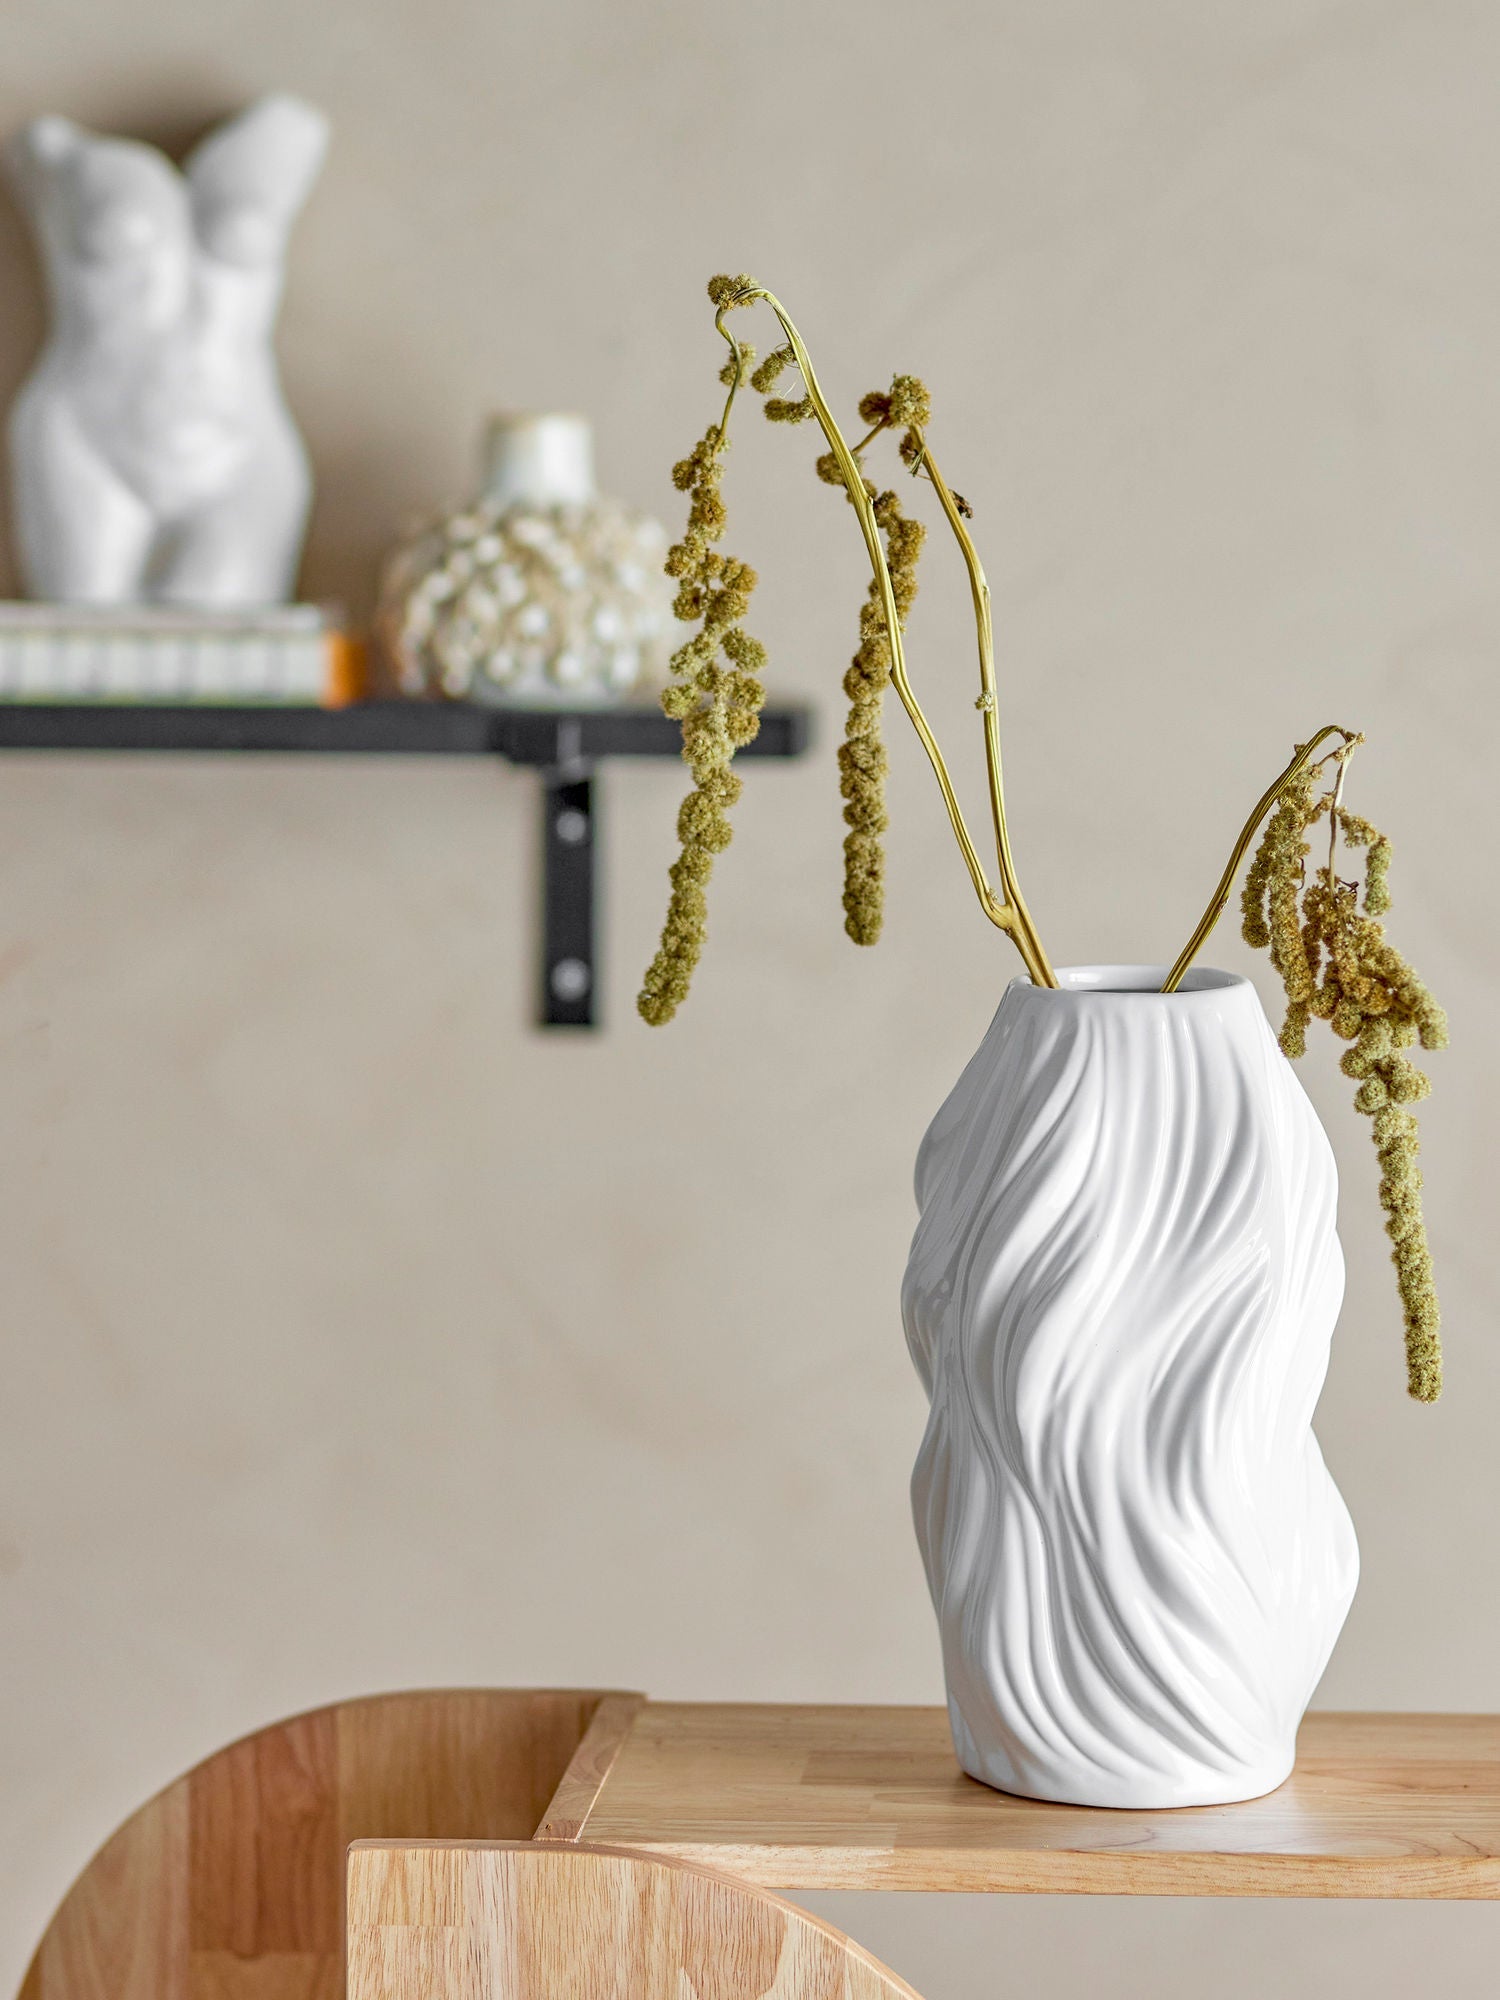 Bloomingville Sanak Vase, White, Ceramic